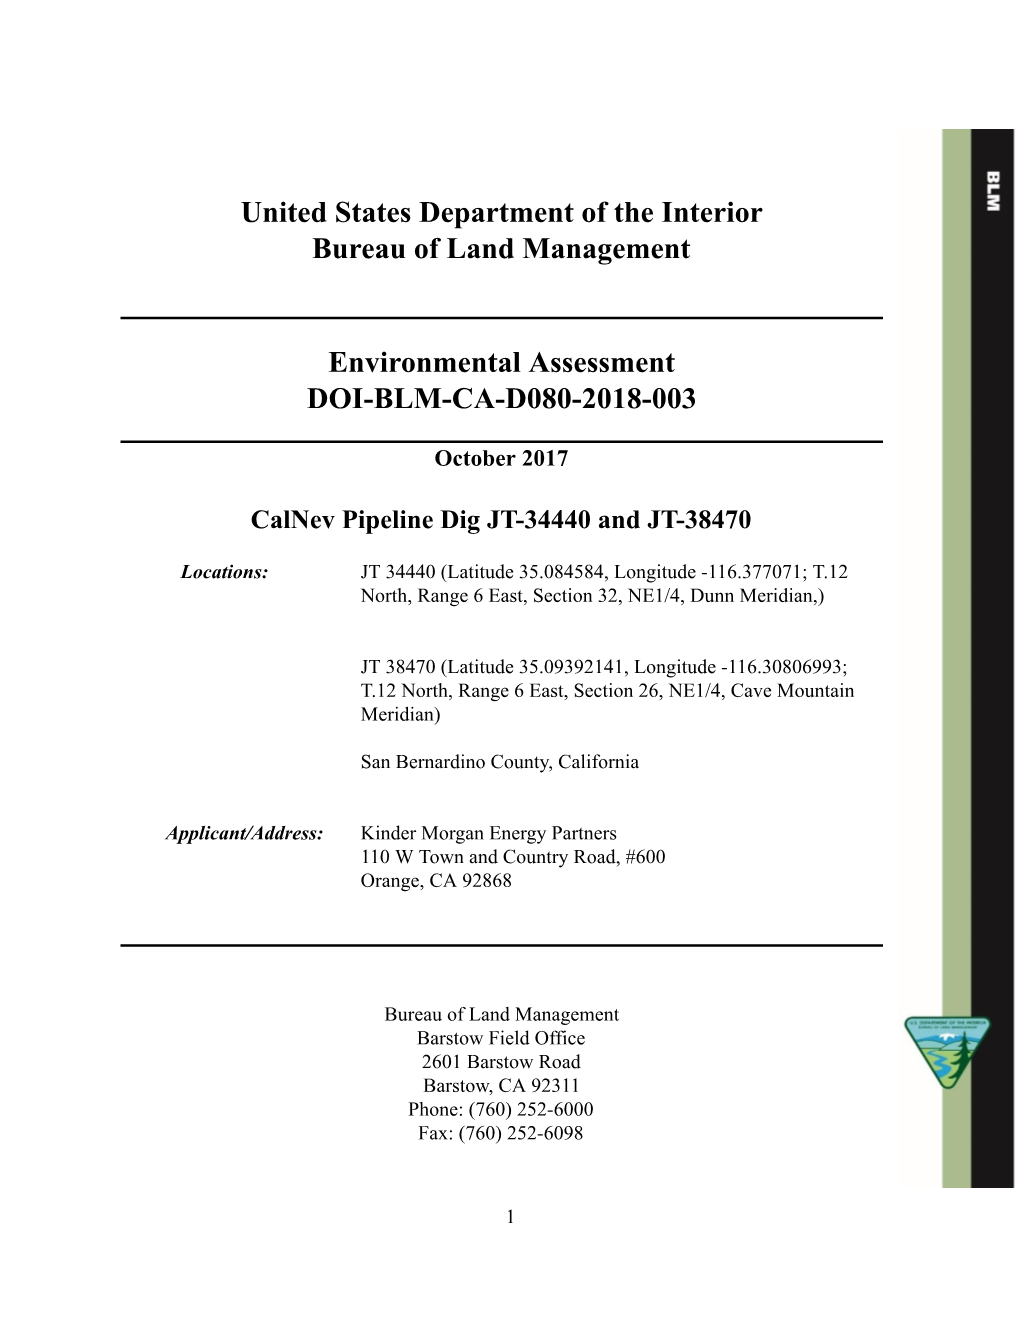 United States Department of the Interior Bureau of Land Management Environmental Assessment DOI-BLM-CA-D080-2018-003